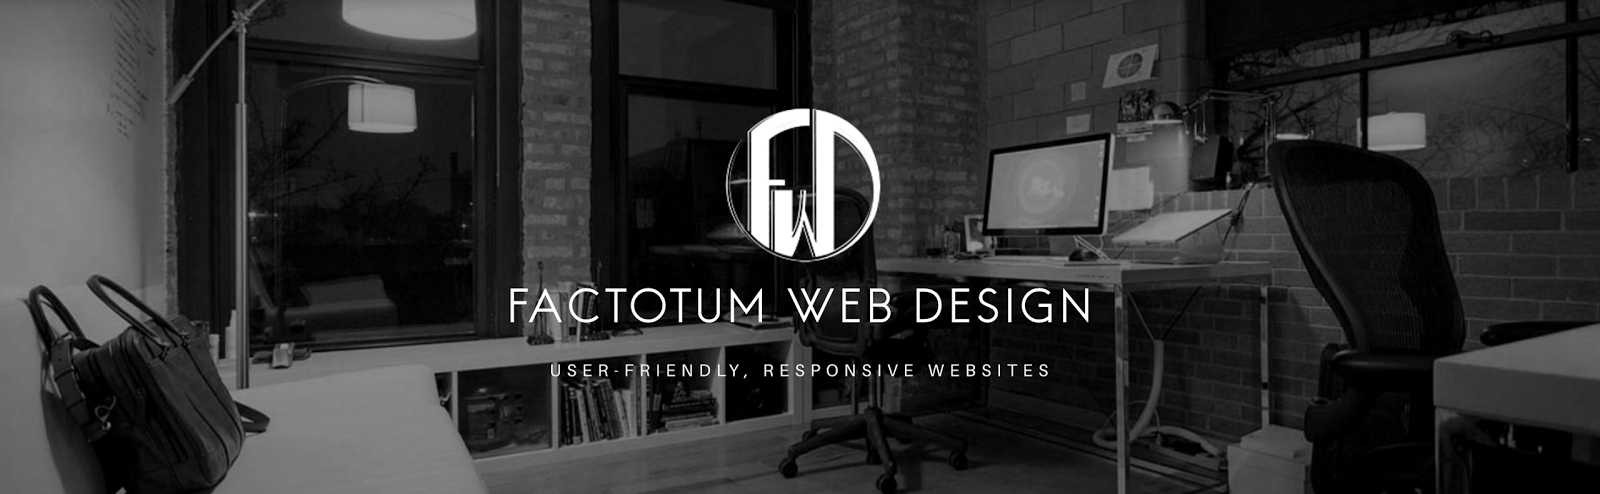 Photo of Factotum Web Design in Astoria City, New York, United States - 1 Picture of Point of interest, Establishment